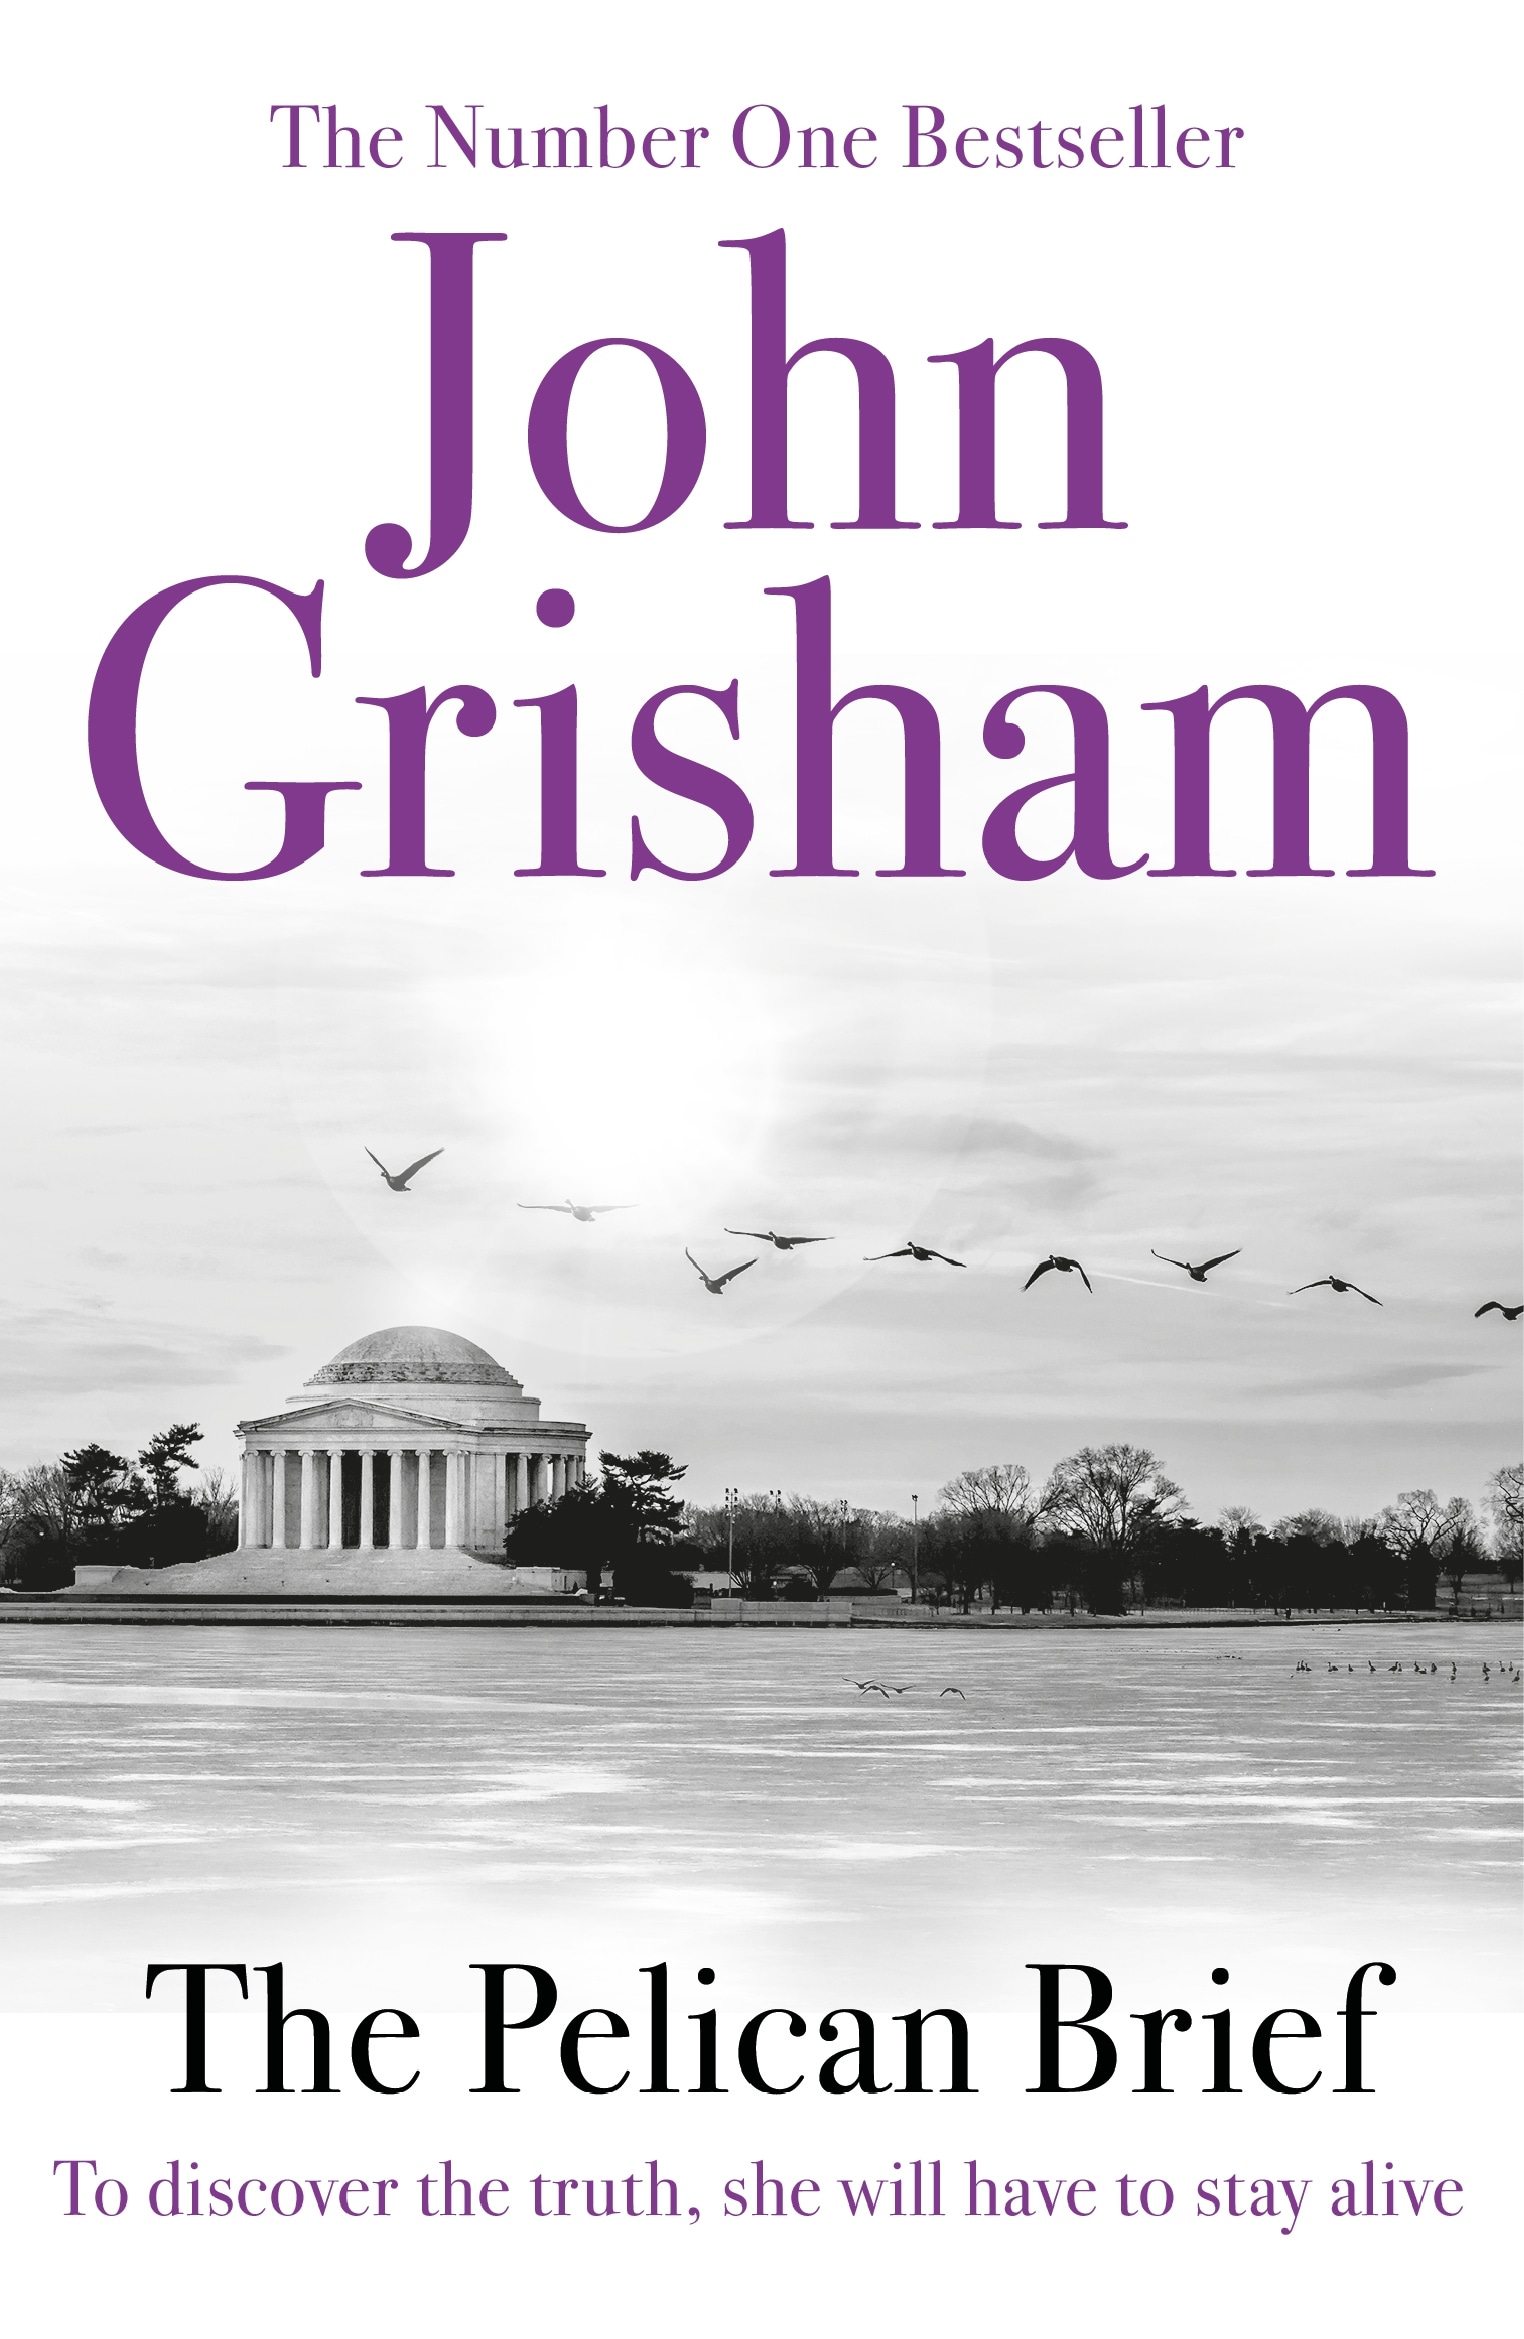 Book “The Pelican Brief” by John Grisham — October 28, 2010